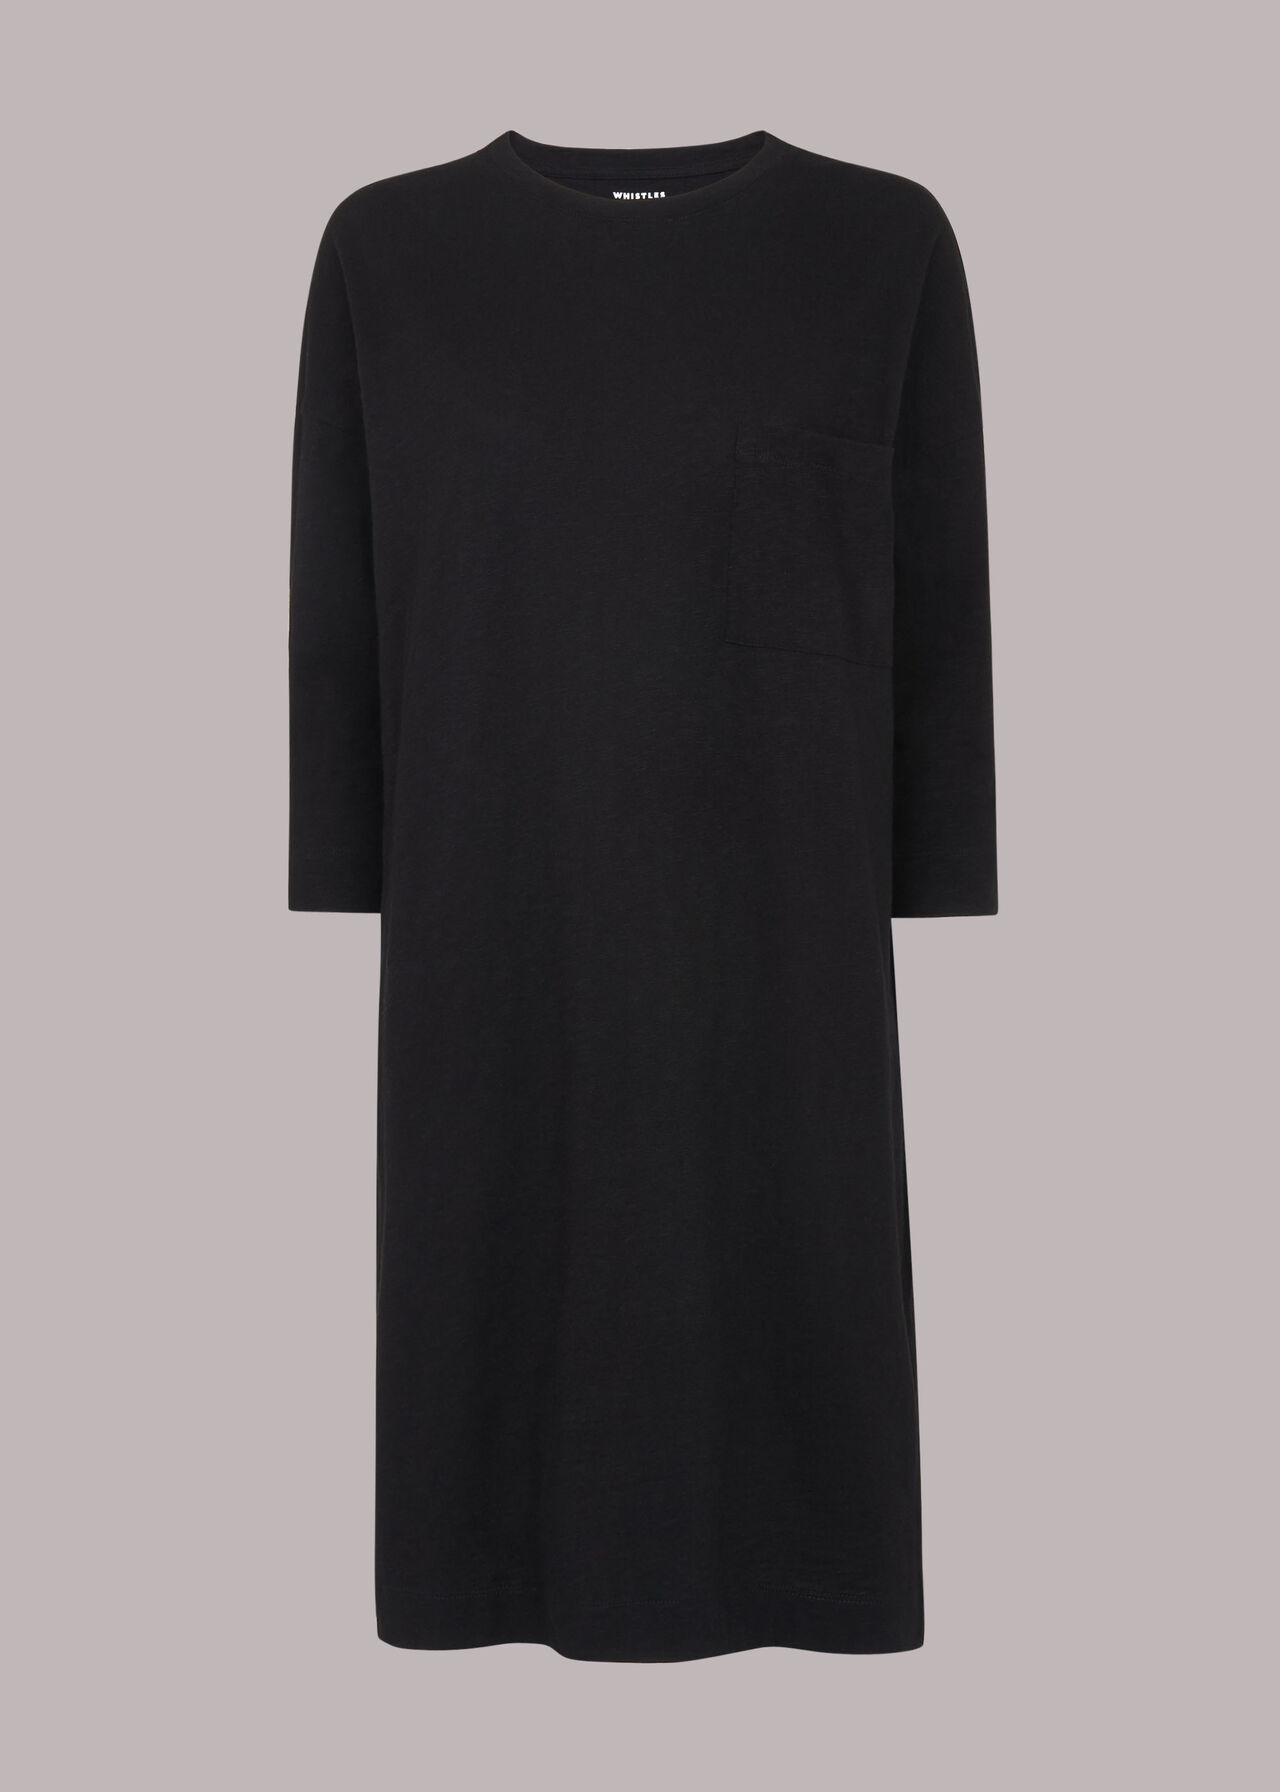 Black Cotton Pocket Dress | WHISTLES